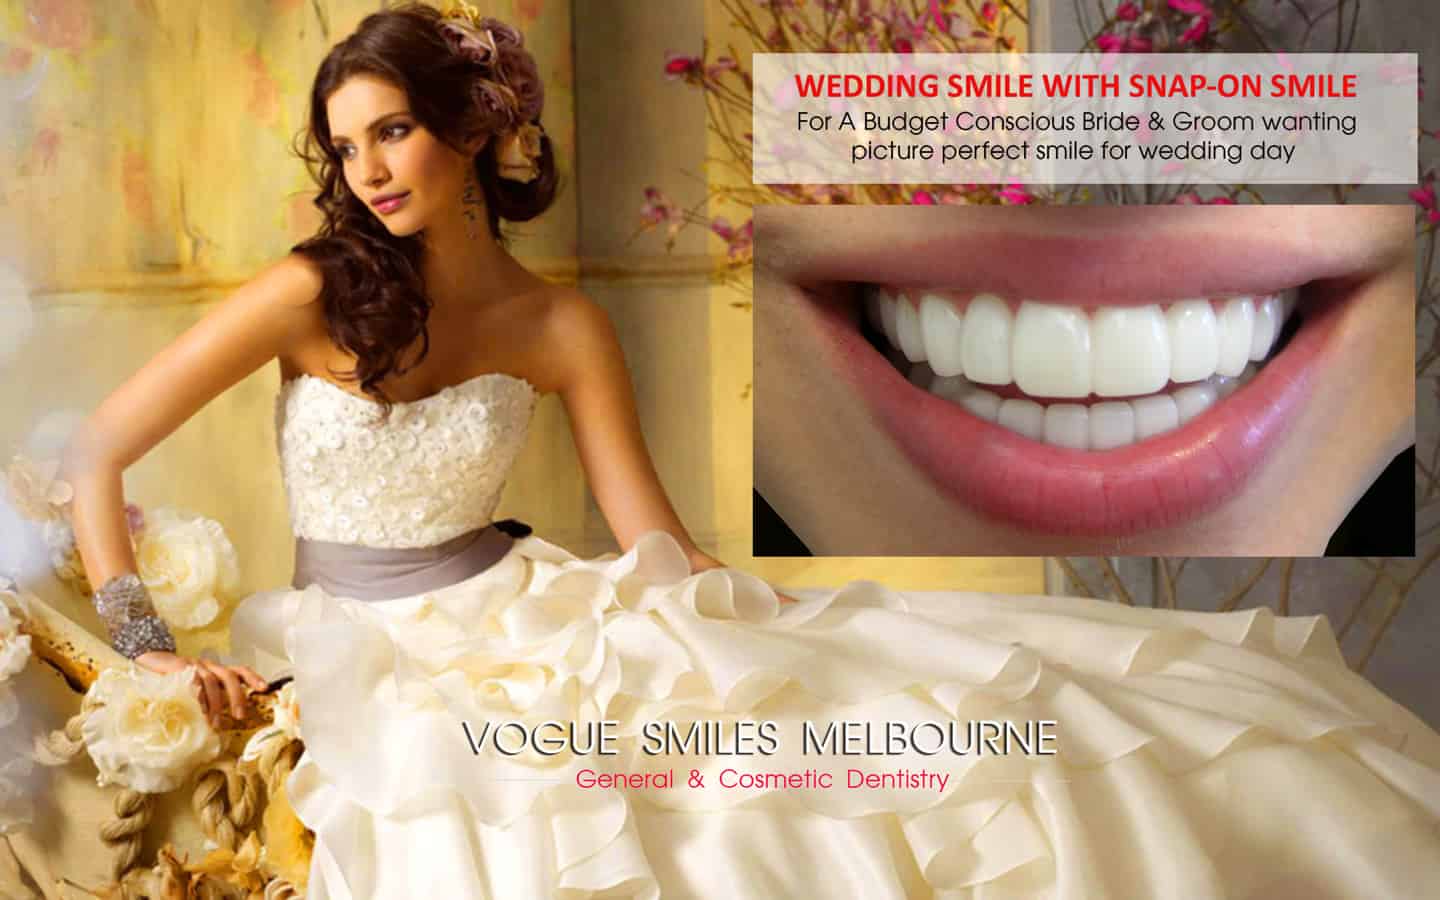 Bride and Groom wedding packages Melbourne CBD Victoria Australia- Bridal Smile Makeover Wedding Packages Melbourne